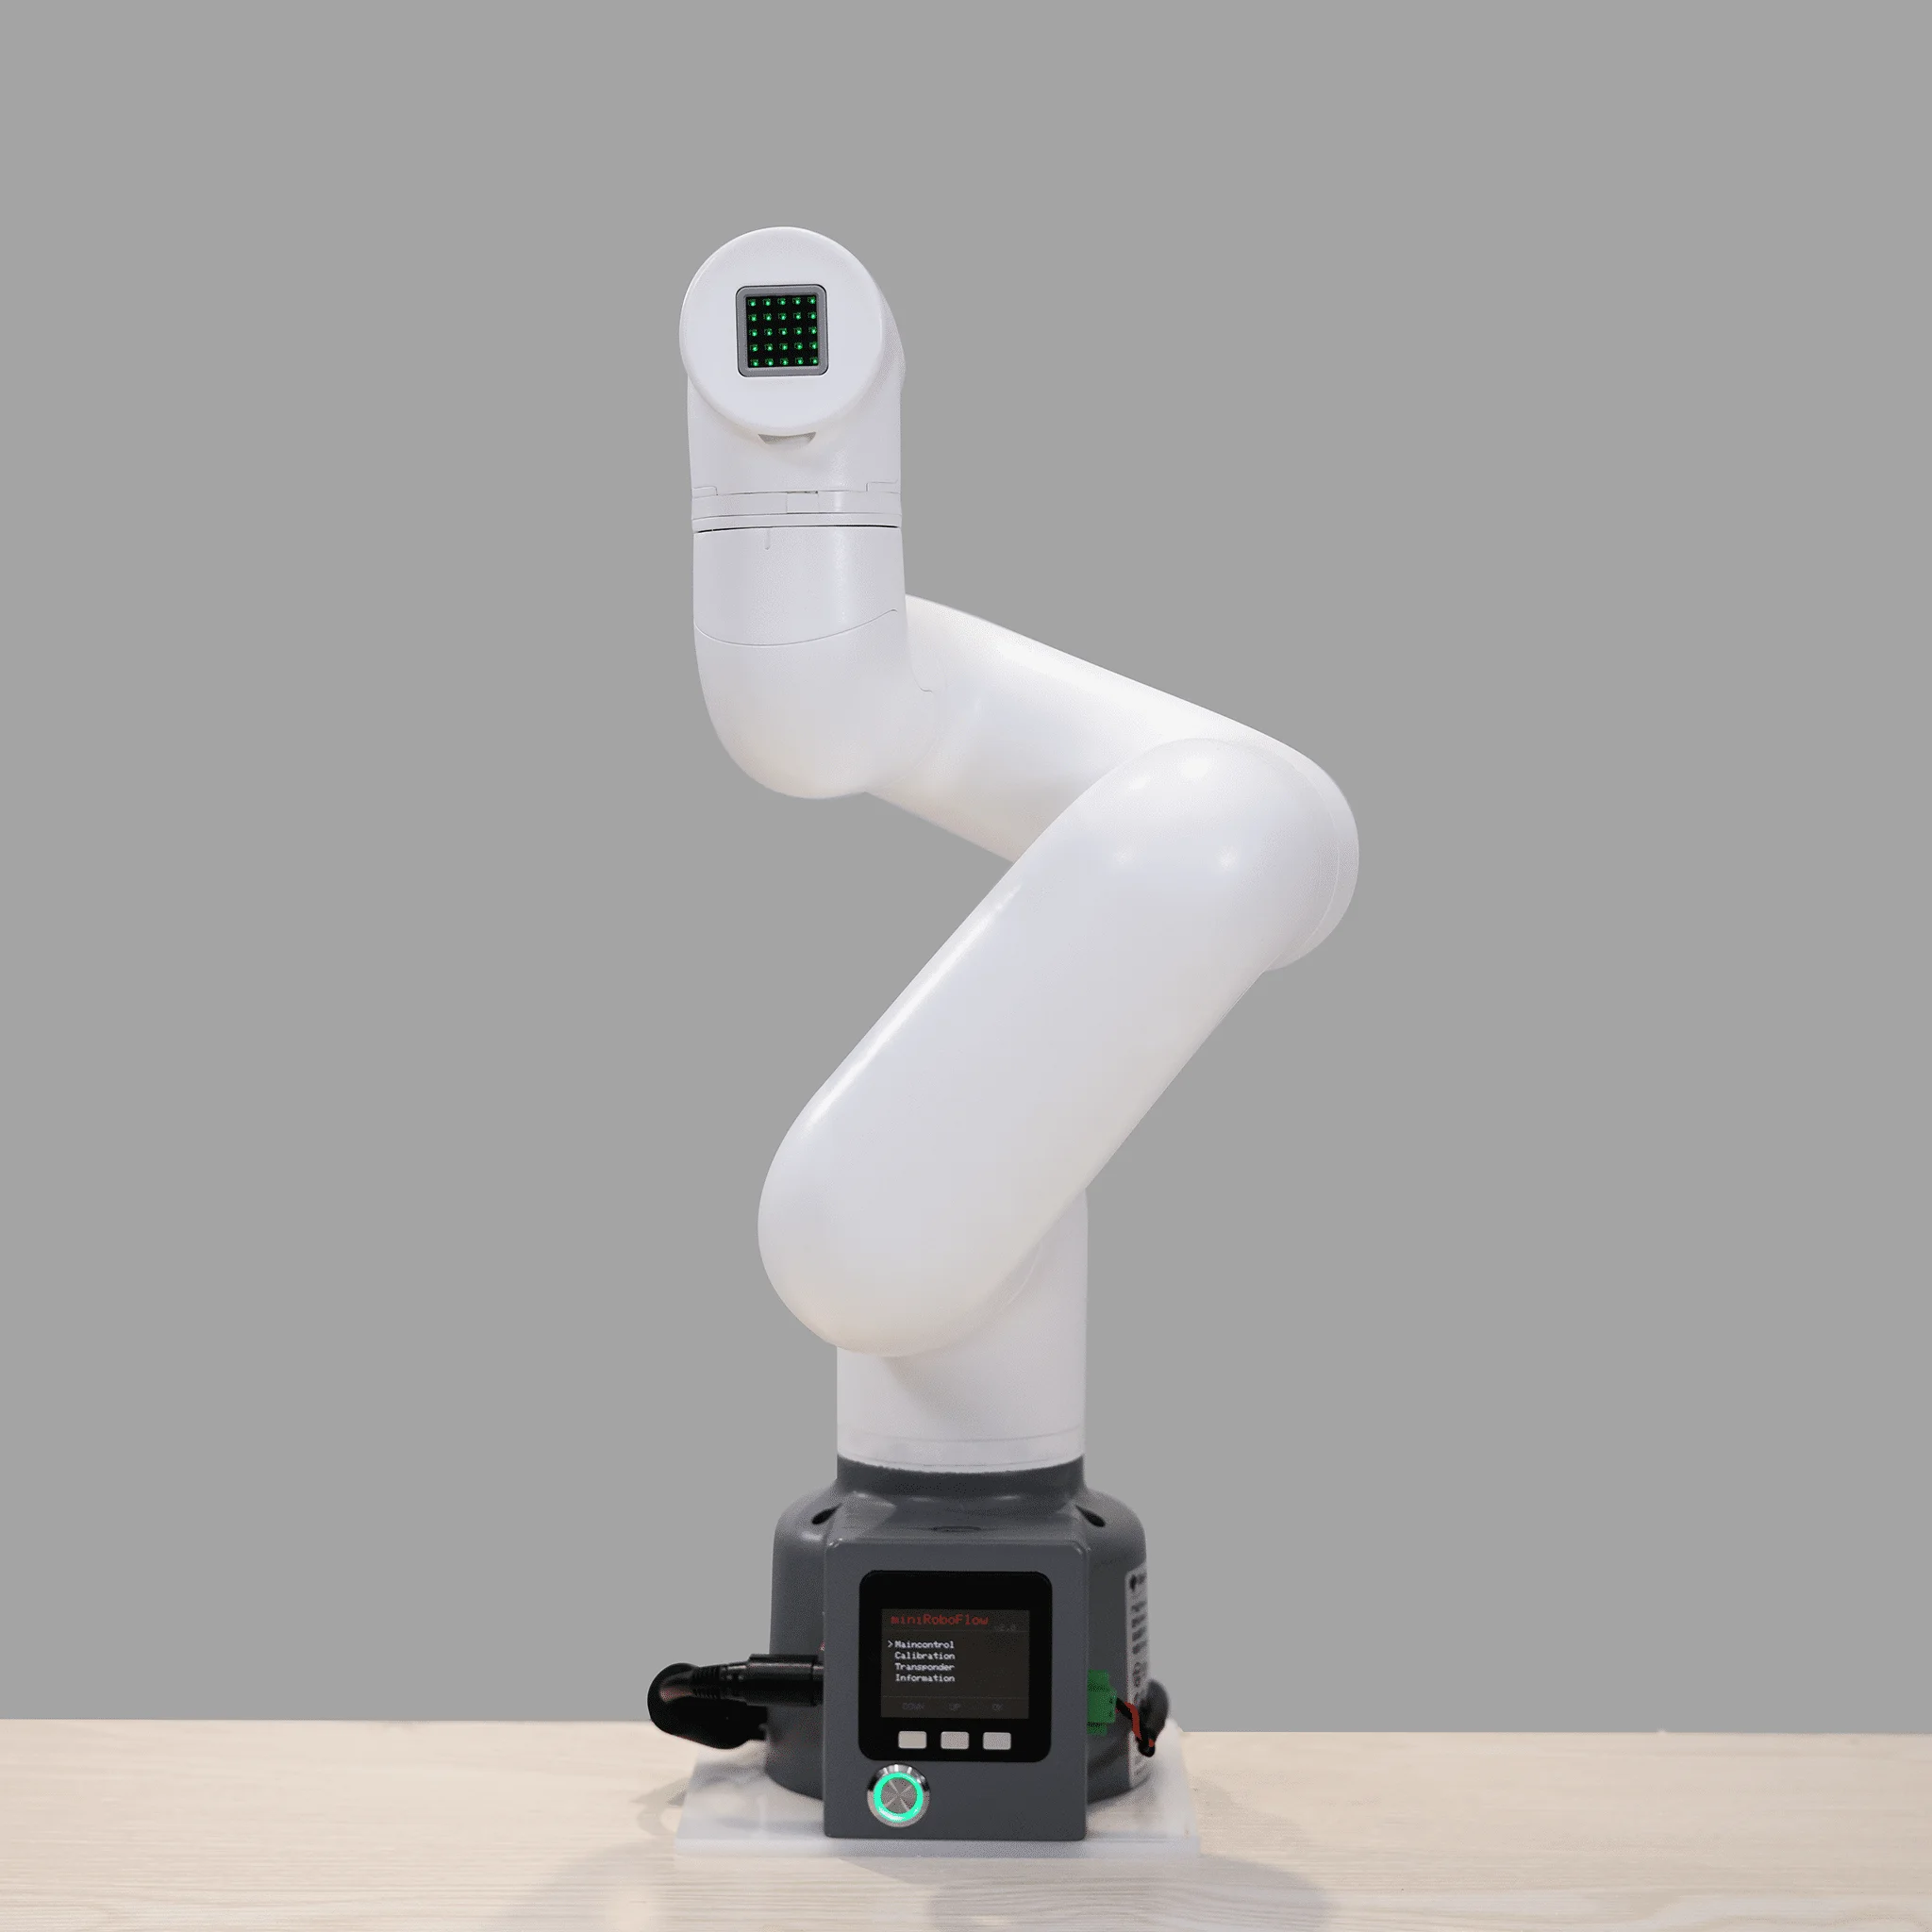 Elefanten Robotik myCobot 320 M5-2022 1KG Nutzlast kooperative Roboter Robotic Arm Desktop Roboter Arm Kommerziellen 6 Dof Robotic Arm